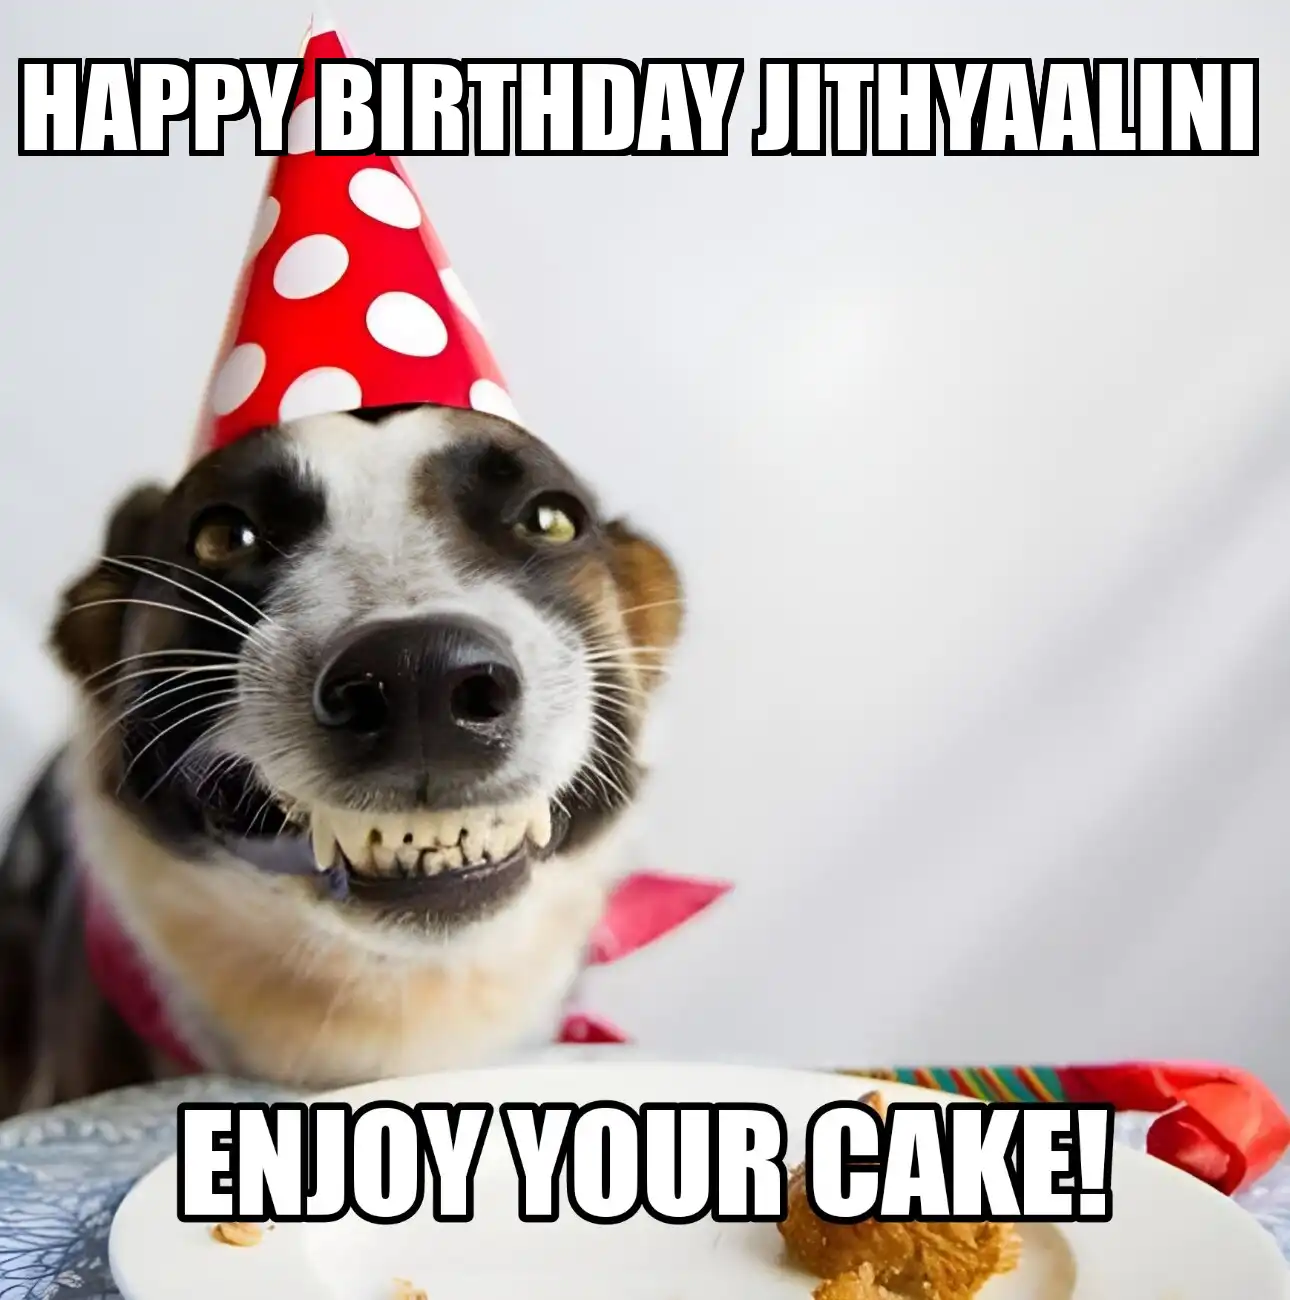 Happy Birthday Jithyaalini Enjoy Your Cake Dog Meme